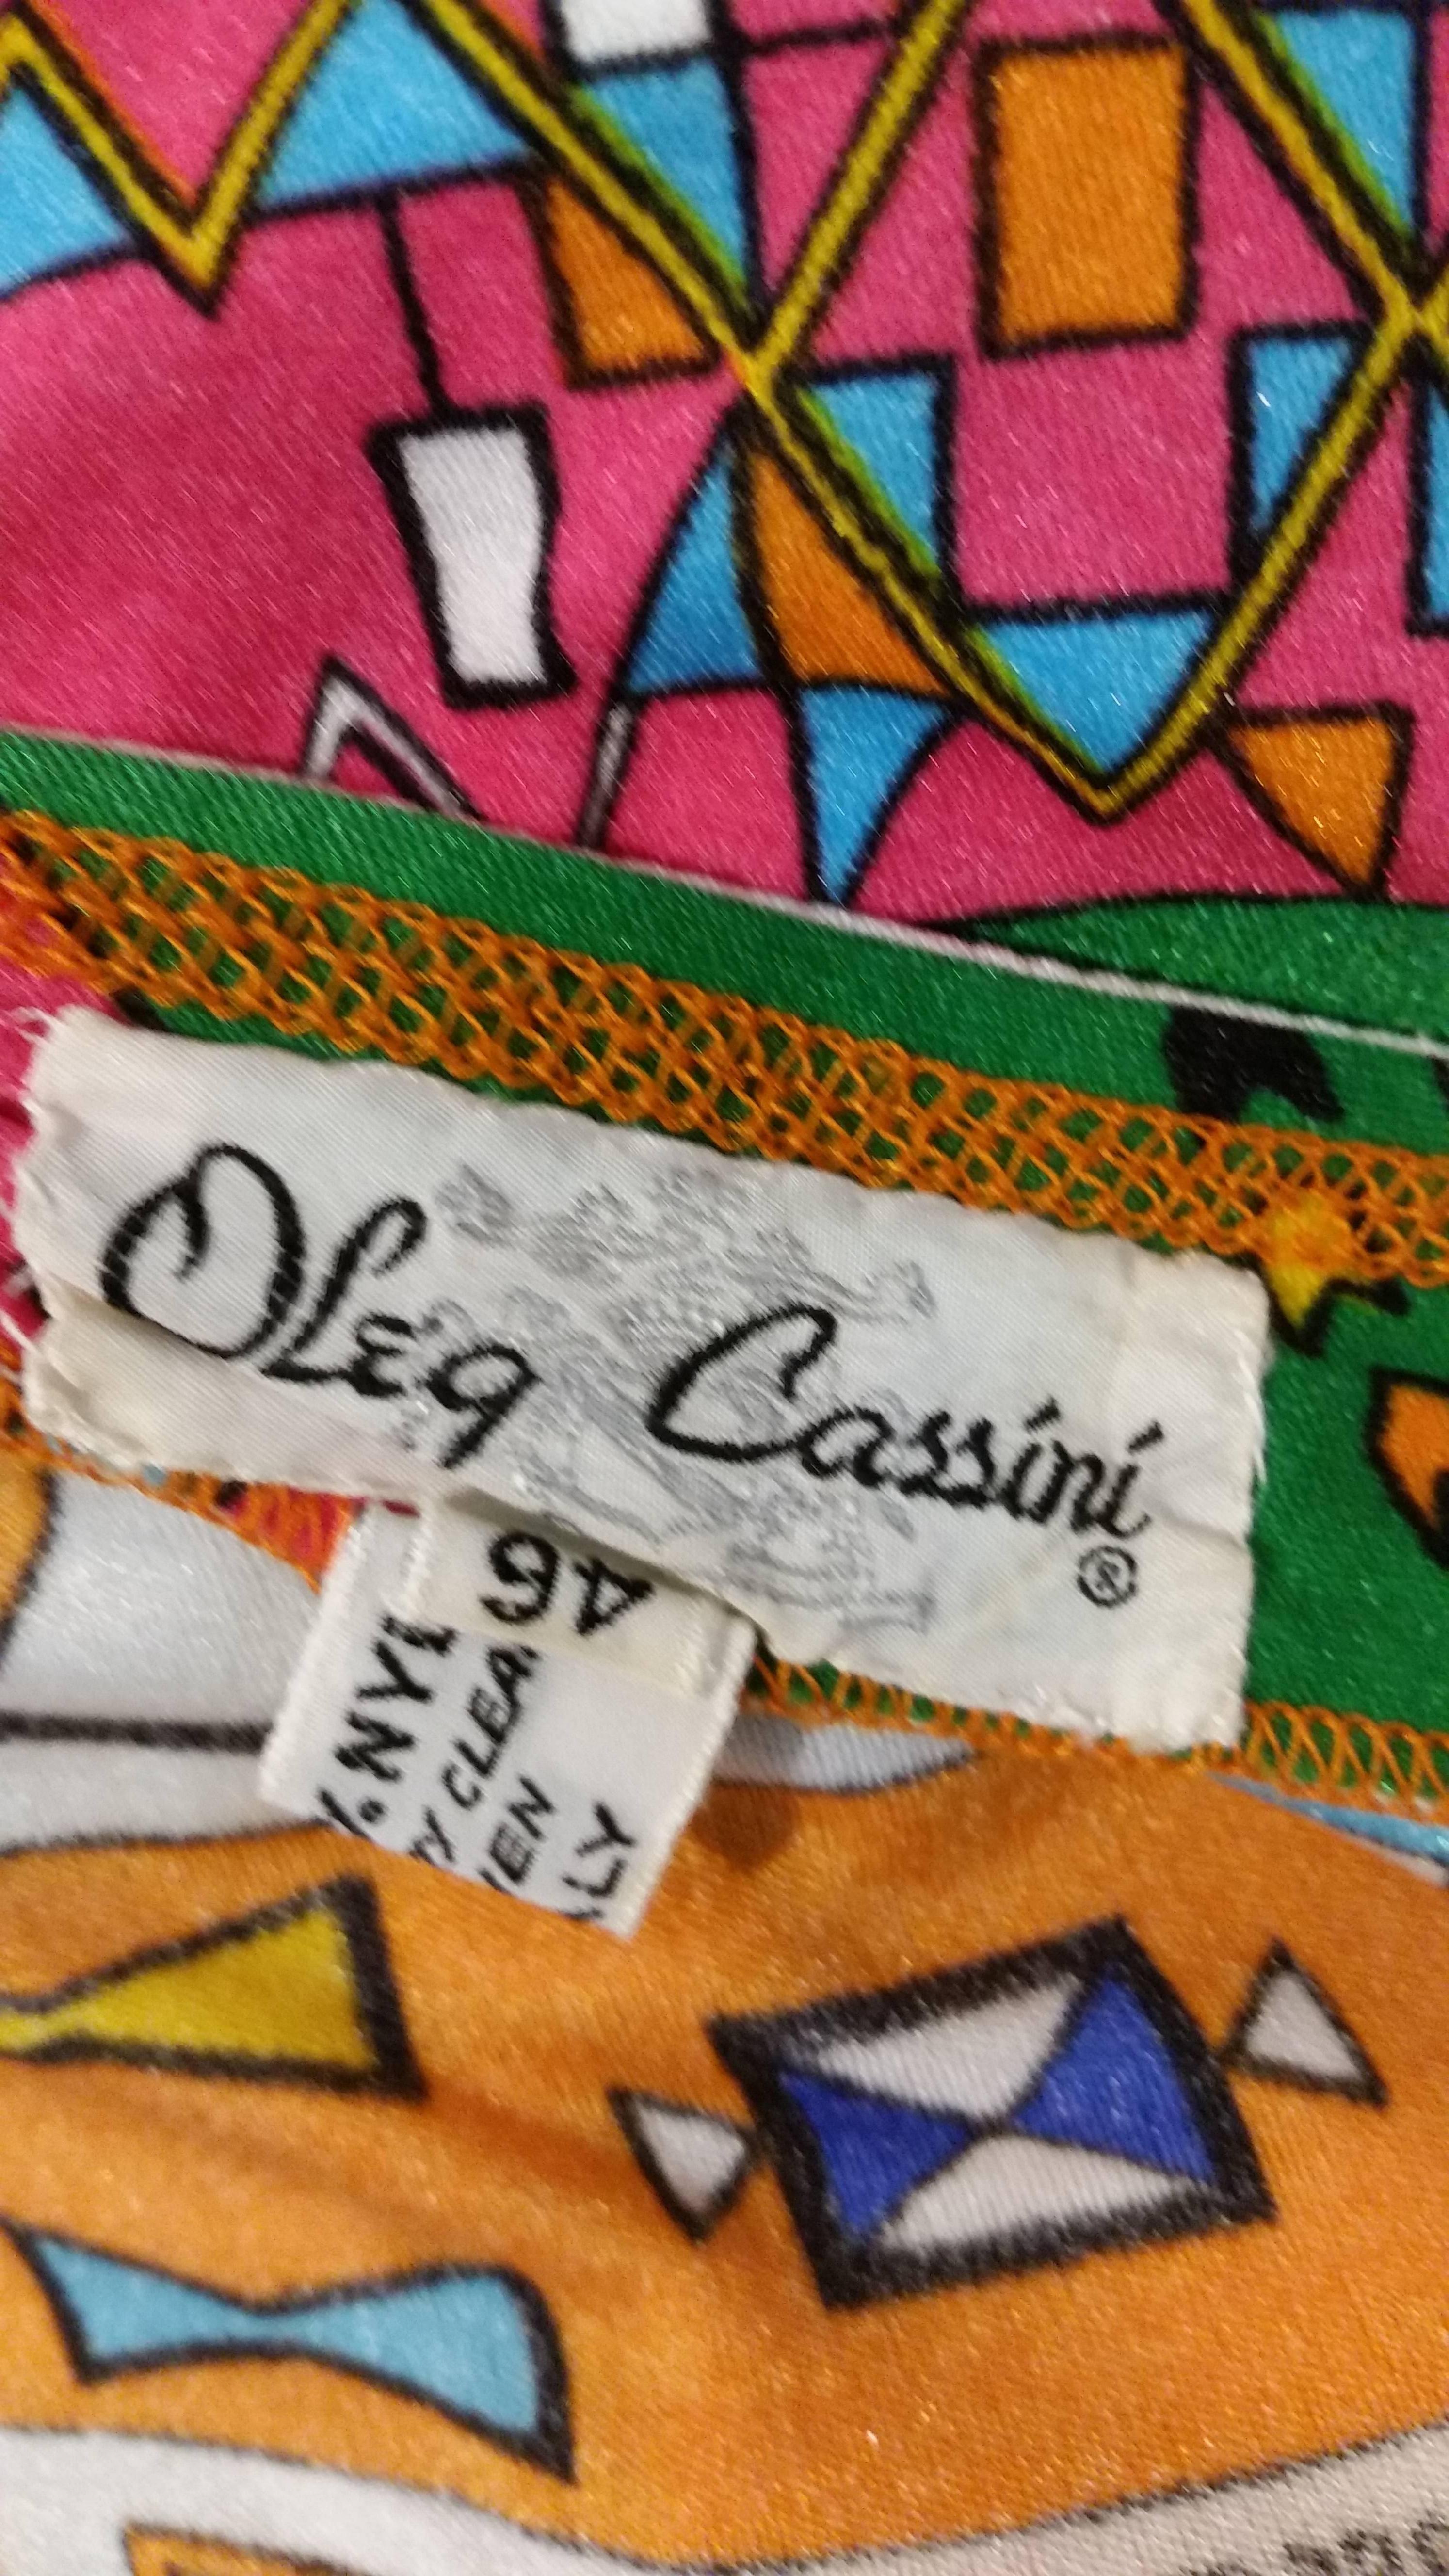 Oleg Cassini Multi Coloured 60's/70's Cropped Top & Maxi Skirt Ensemble For Sale 2